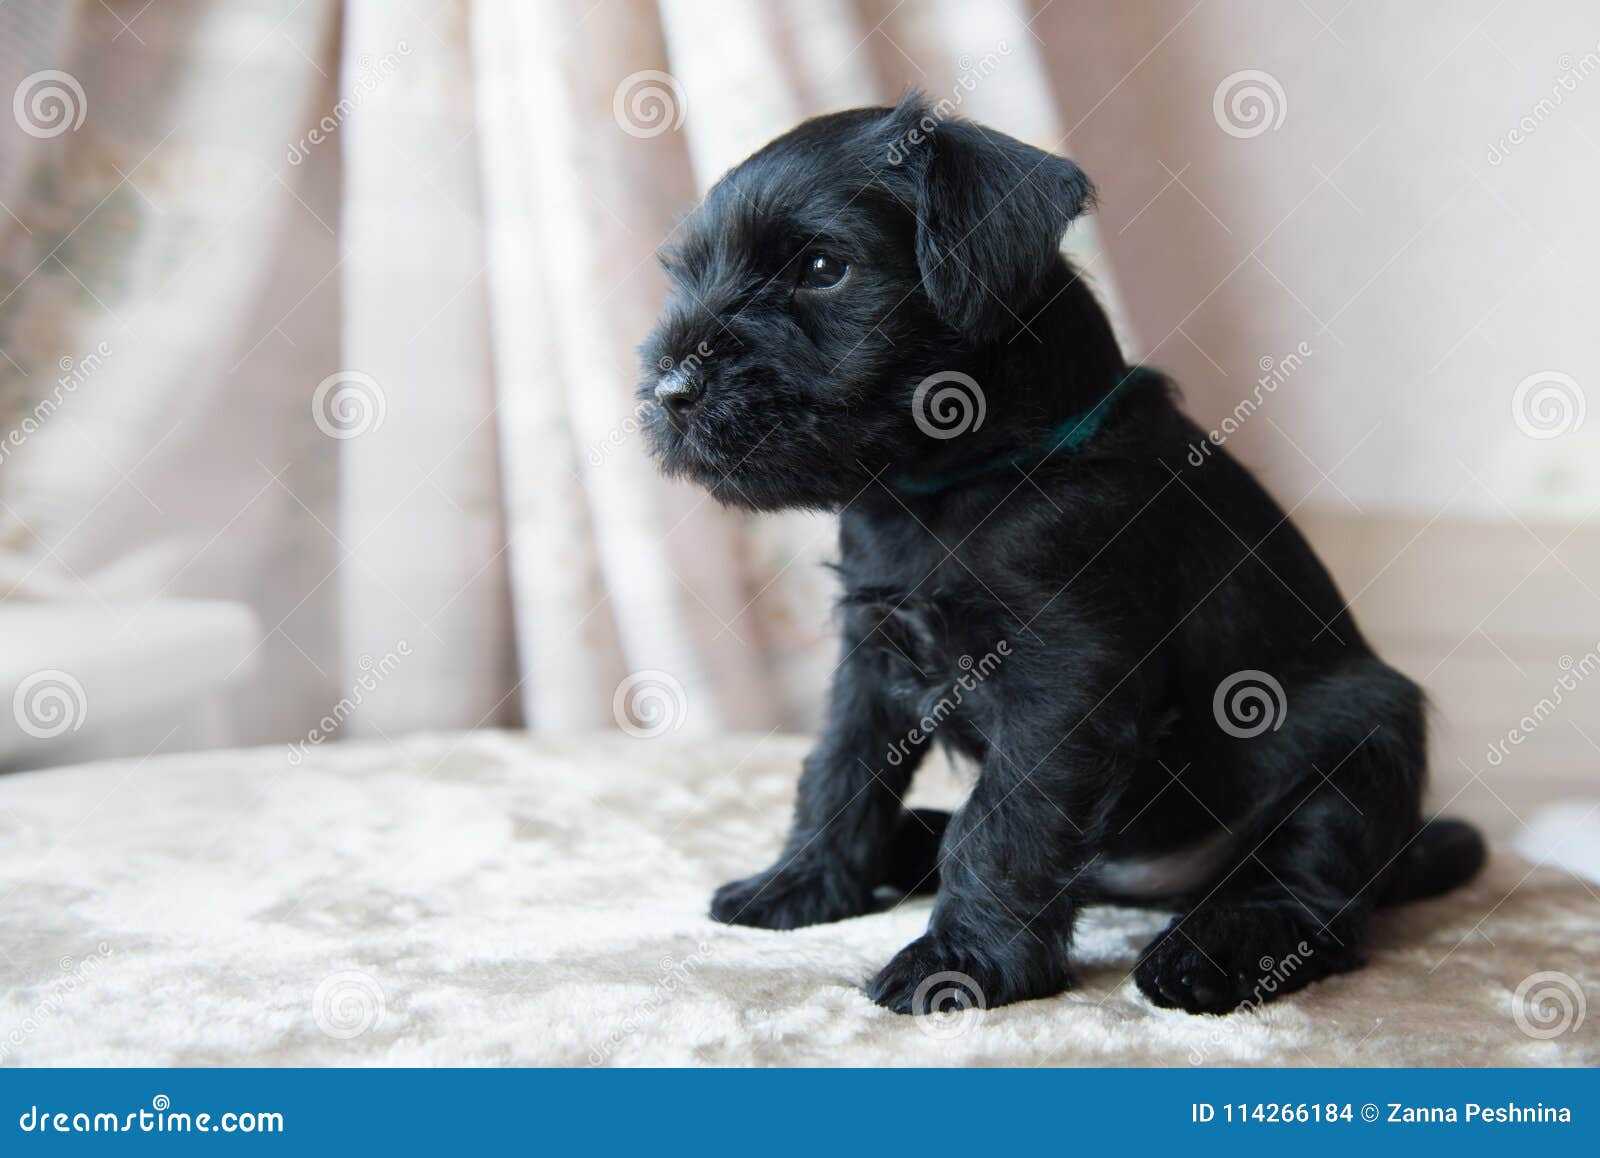 miniature schnauzer puppies